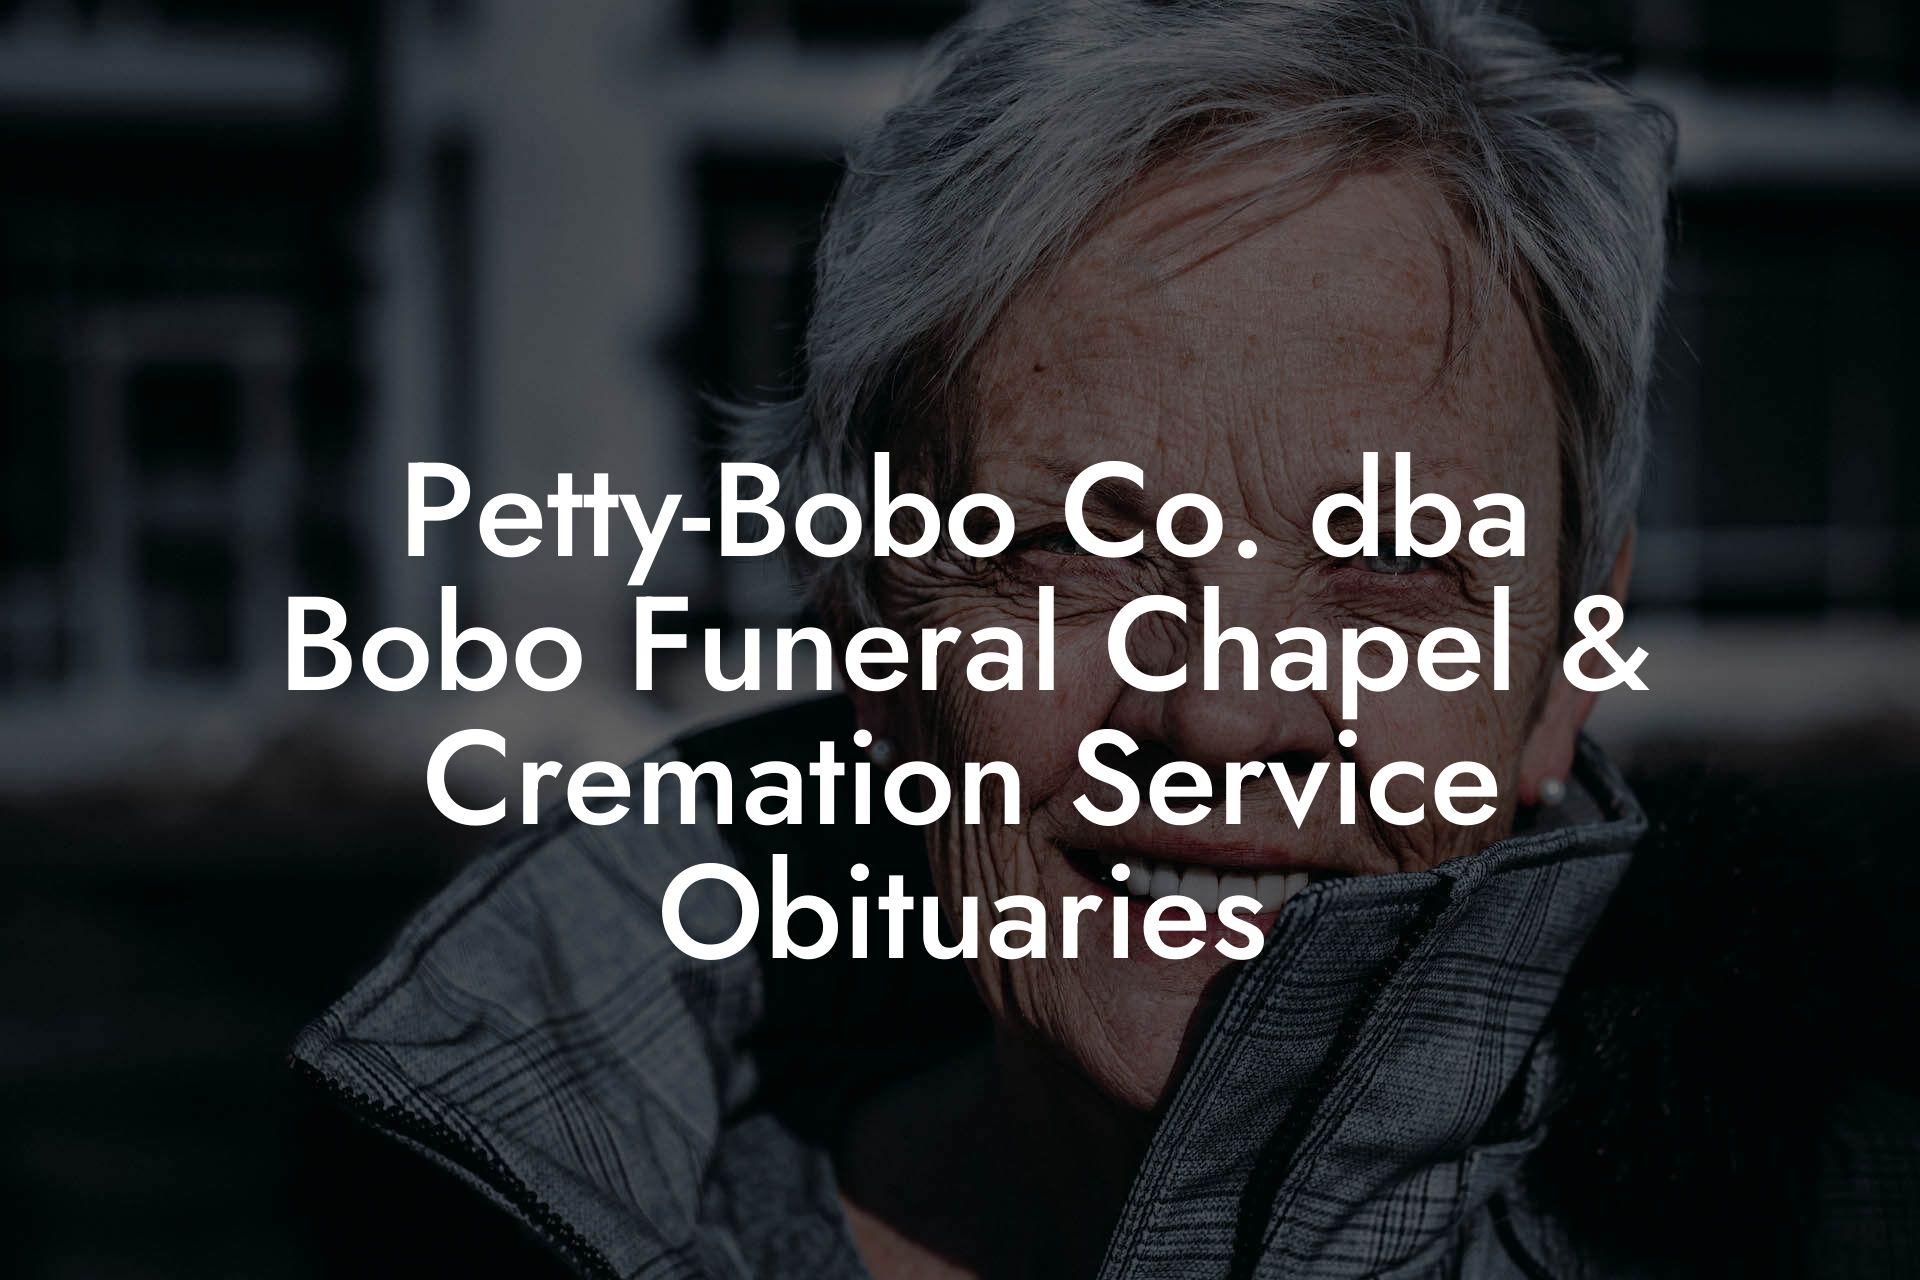 Petty-Bobo Co. dba Bobo Funeral Chapel & Cremation Service Obituaries